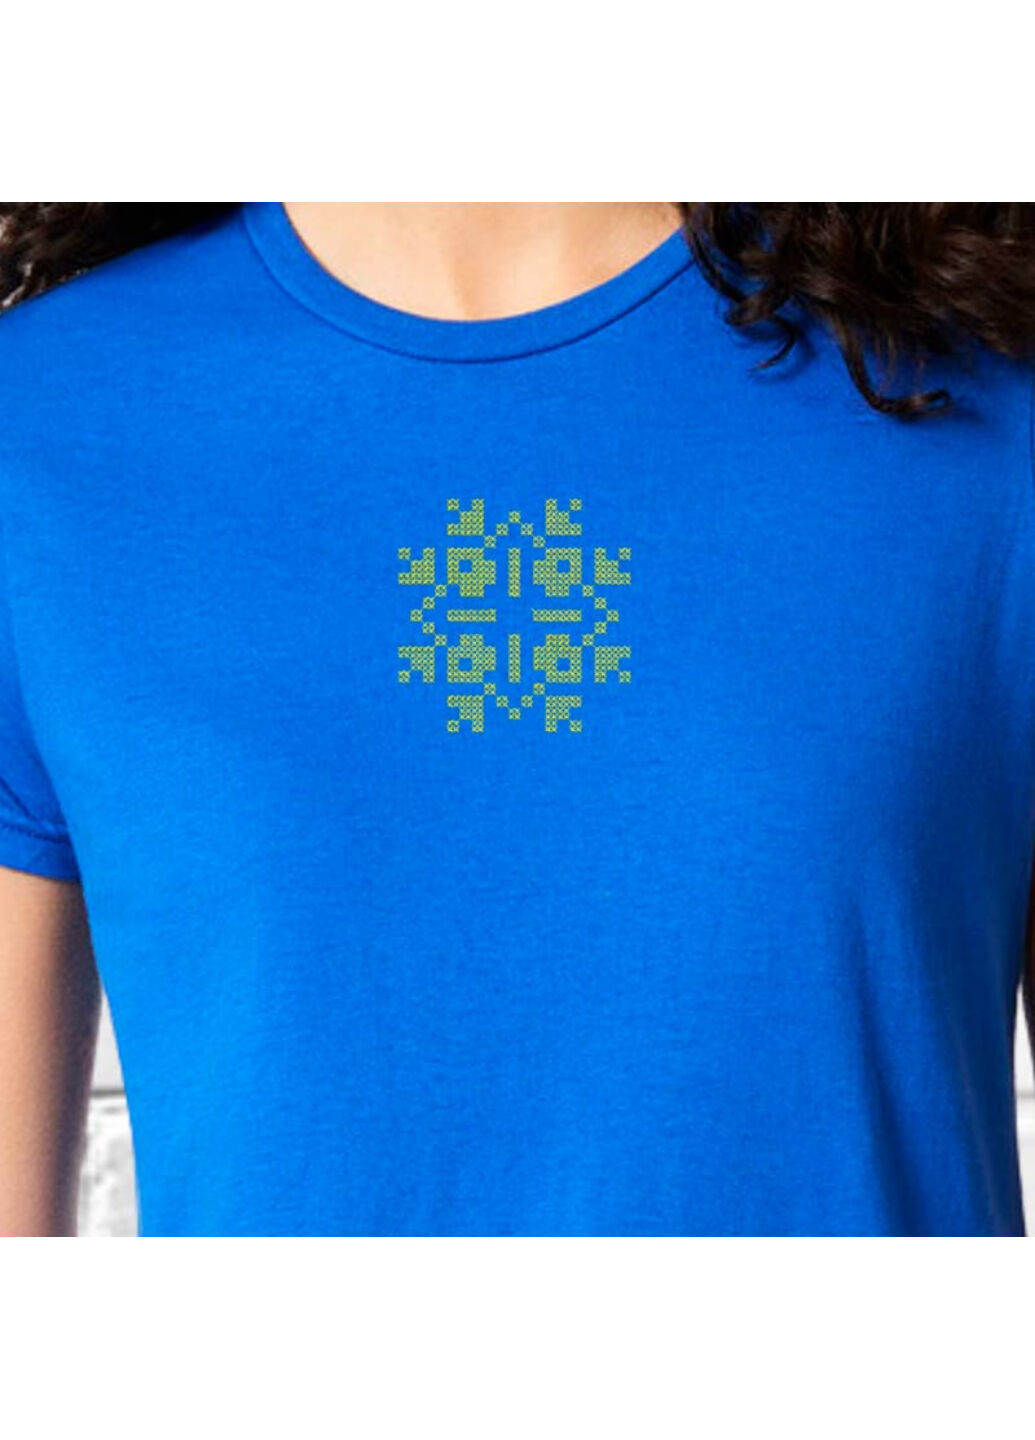 Синяя футболка етно з вишивкою 02-3 женская синий xl No Brand